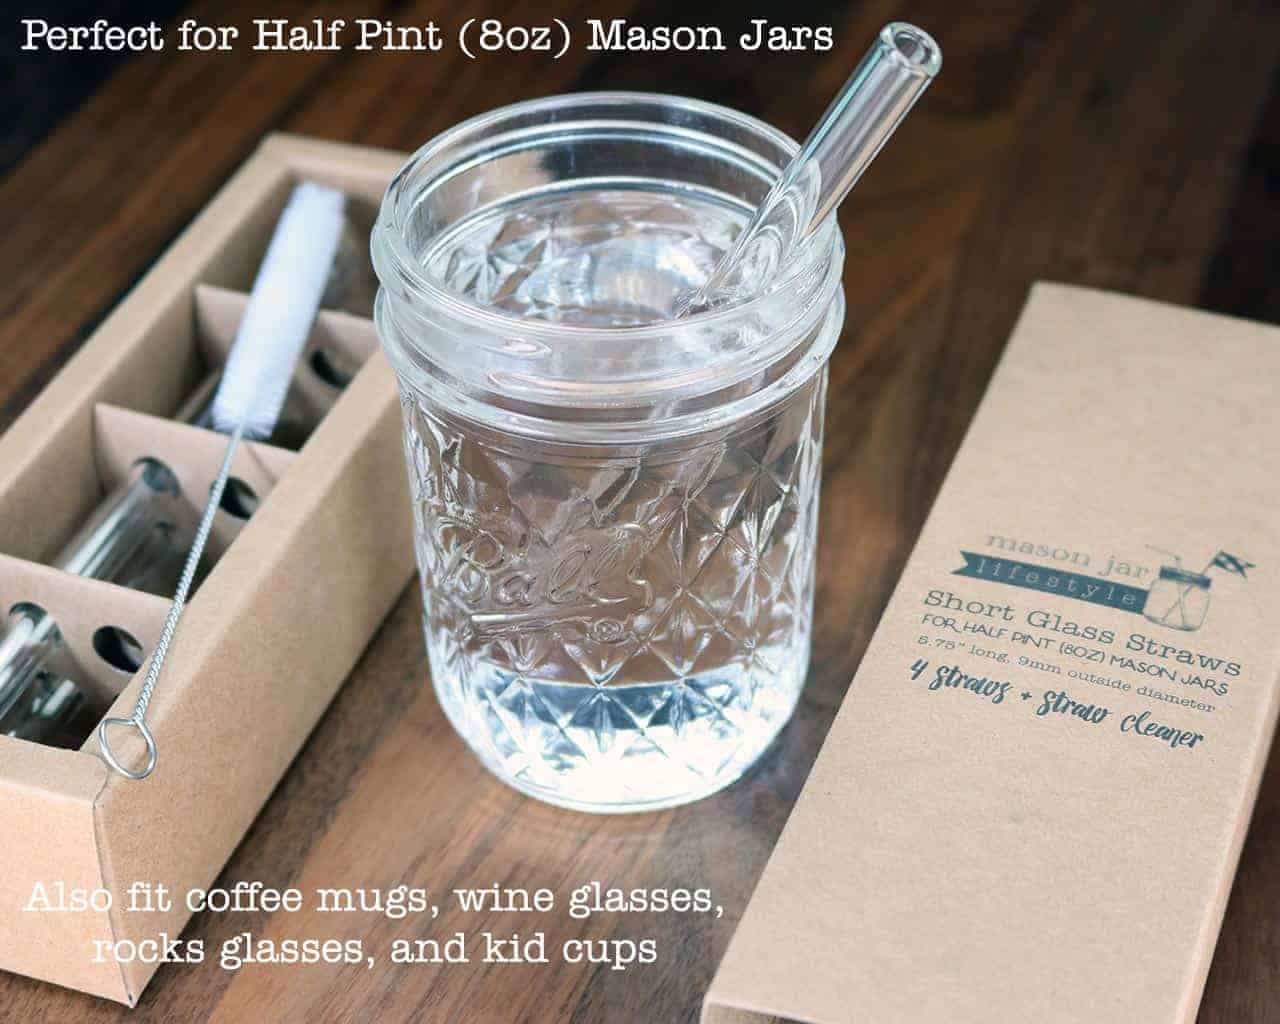 mjl-glass-straws-short-half-pint-8oz-mason-jars-5.75-inches-9mm-4-pack-cleaner-box